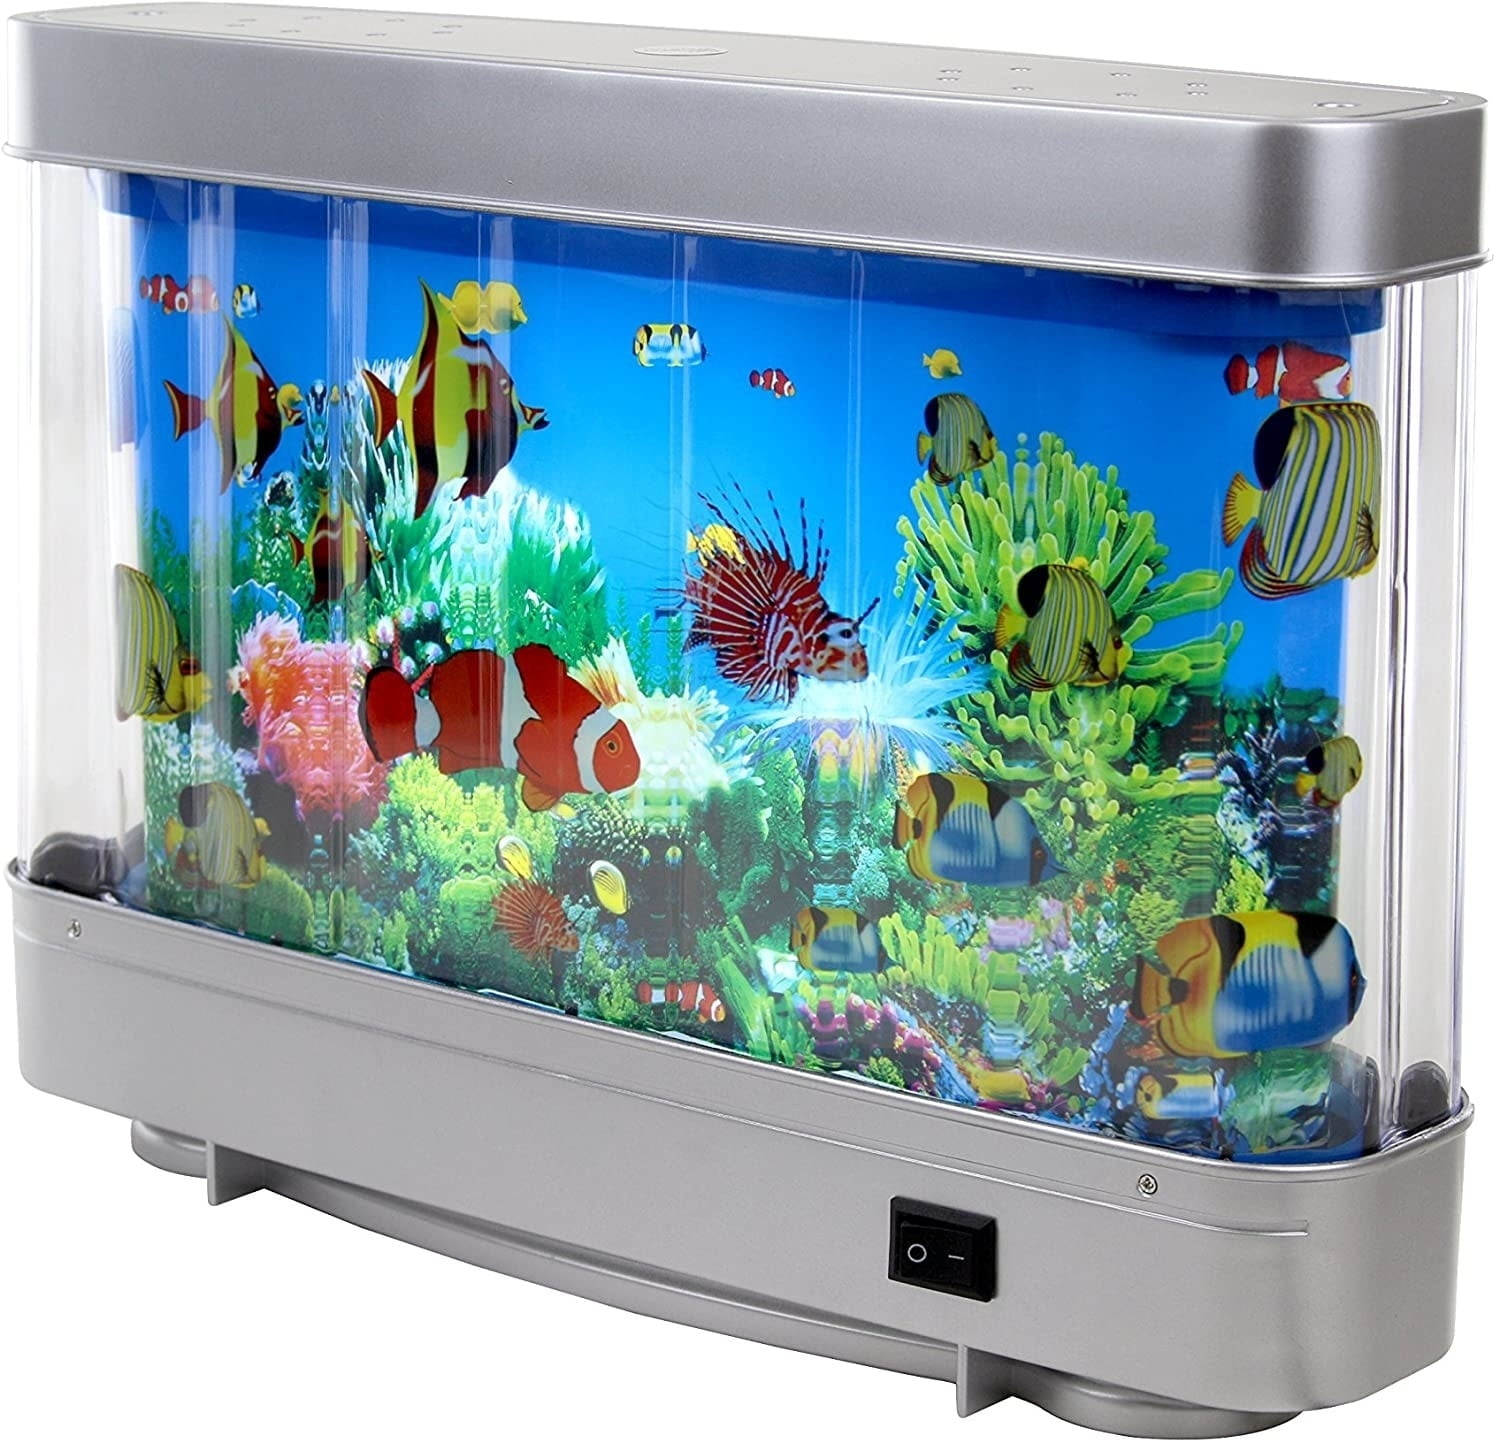 het is mooi Leed Koe Artificial Tropical Fish Dolphin Aquarium Decorative Lamp Virtual Ocean in  Motion Lighting Move Led Tank Decoration Landscape - Walmart.com